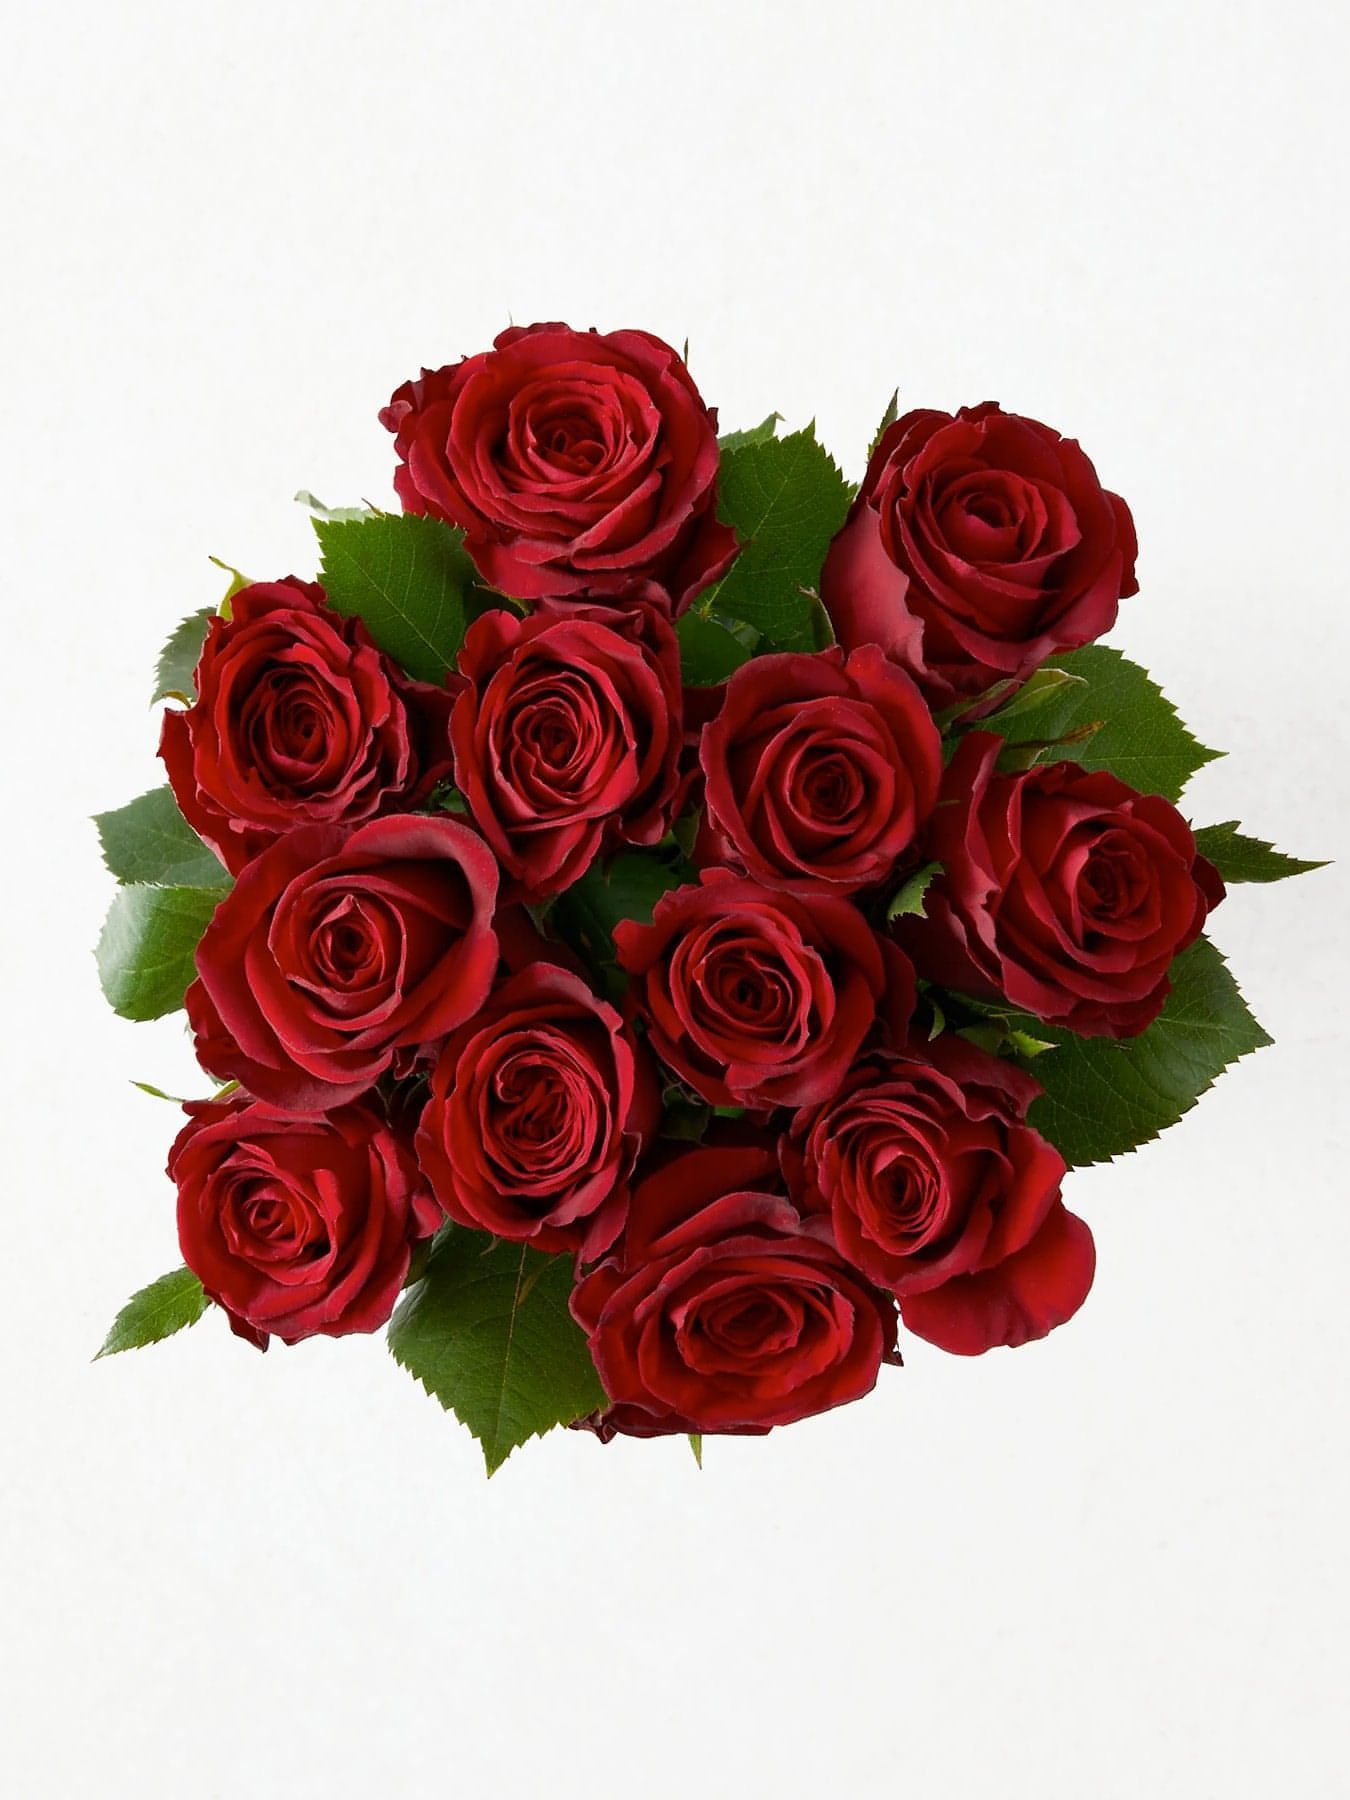 12 Red Roses in Vase - CherryBlossomDubai.ae